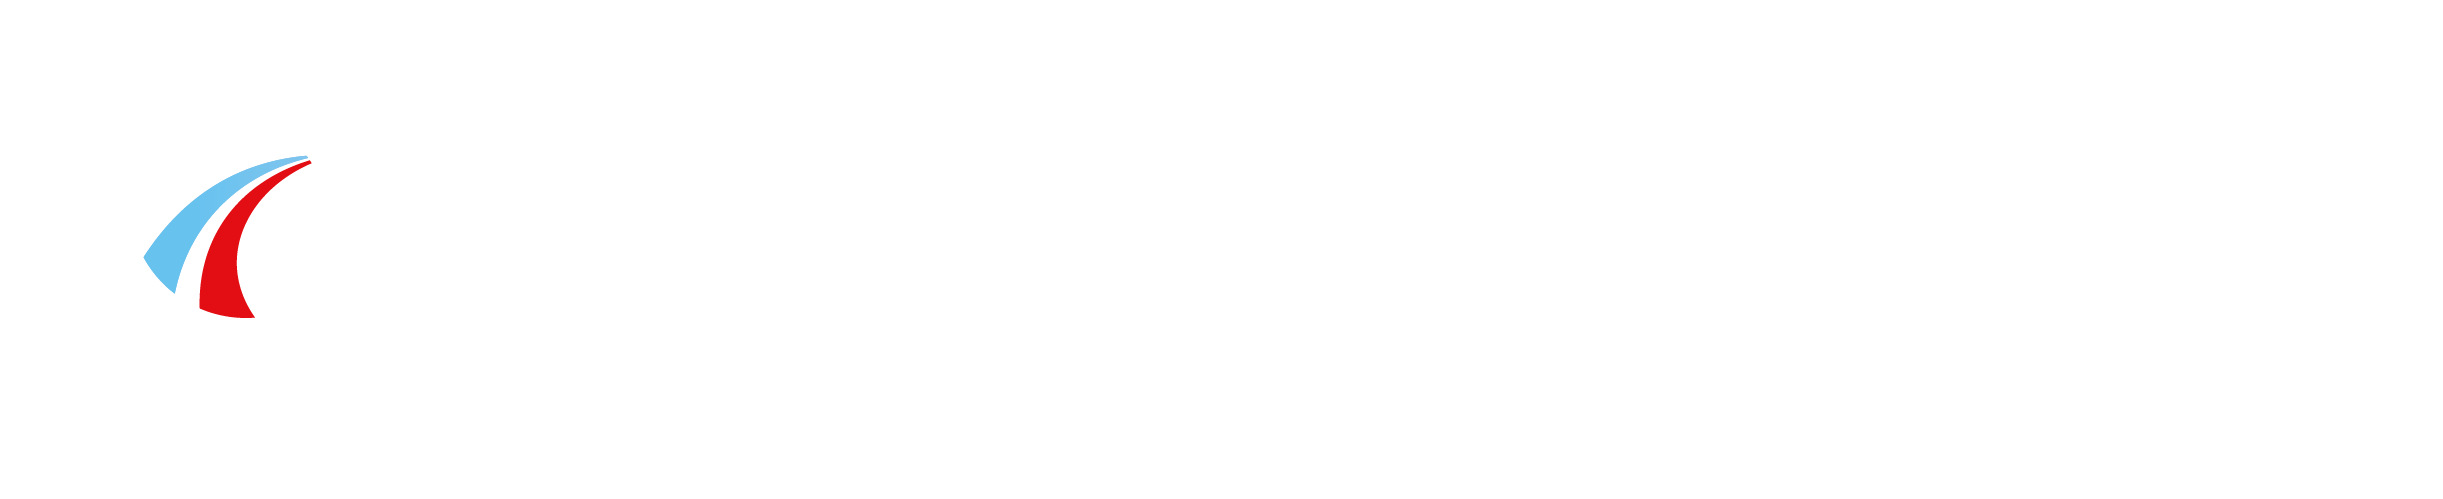 City Airport Logo